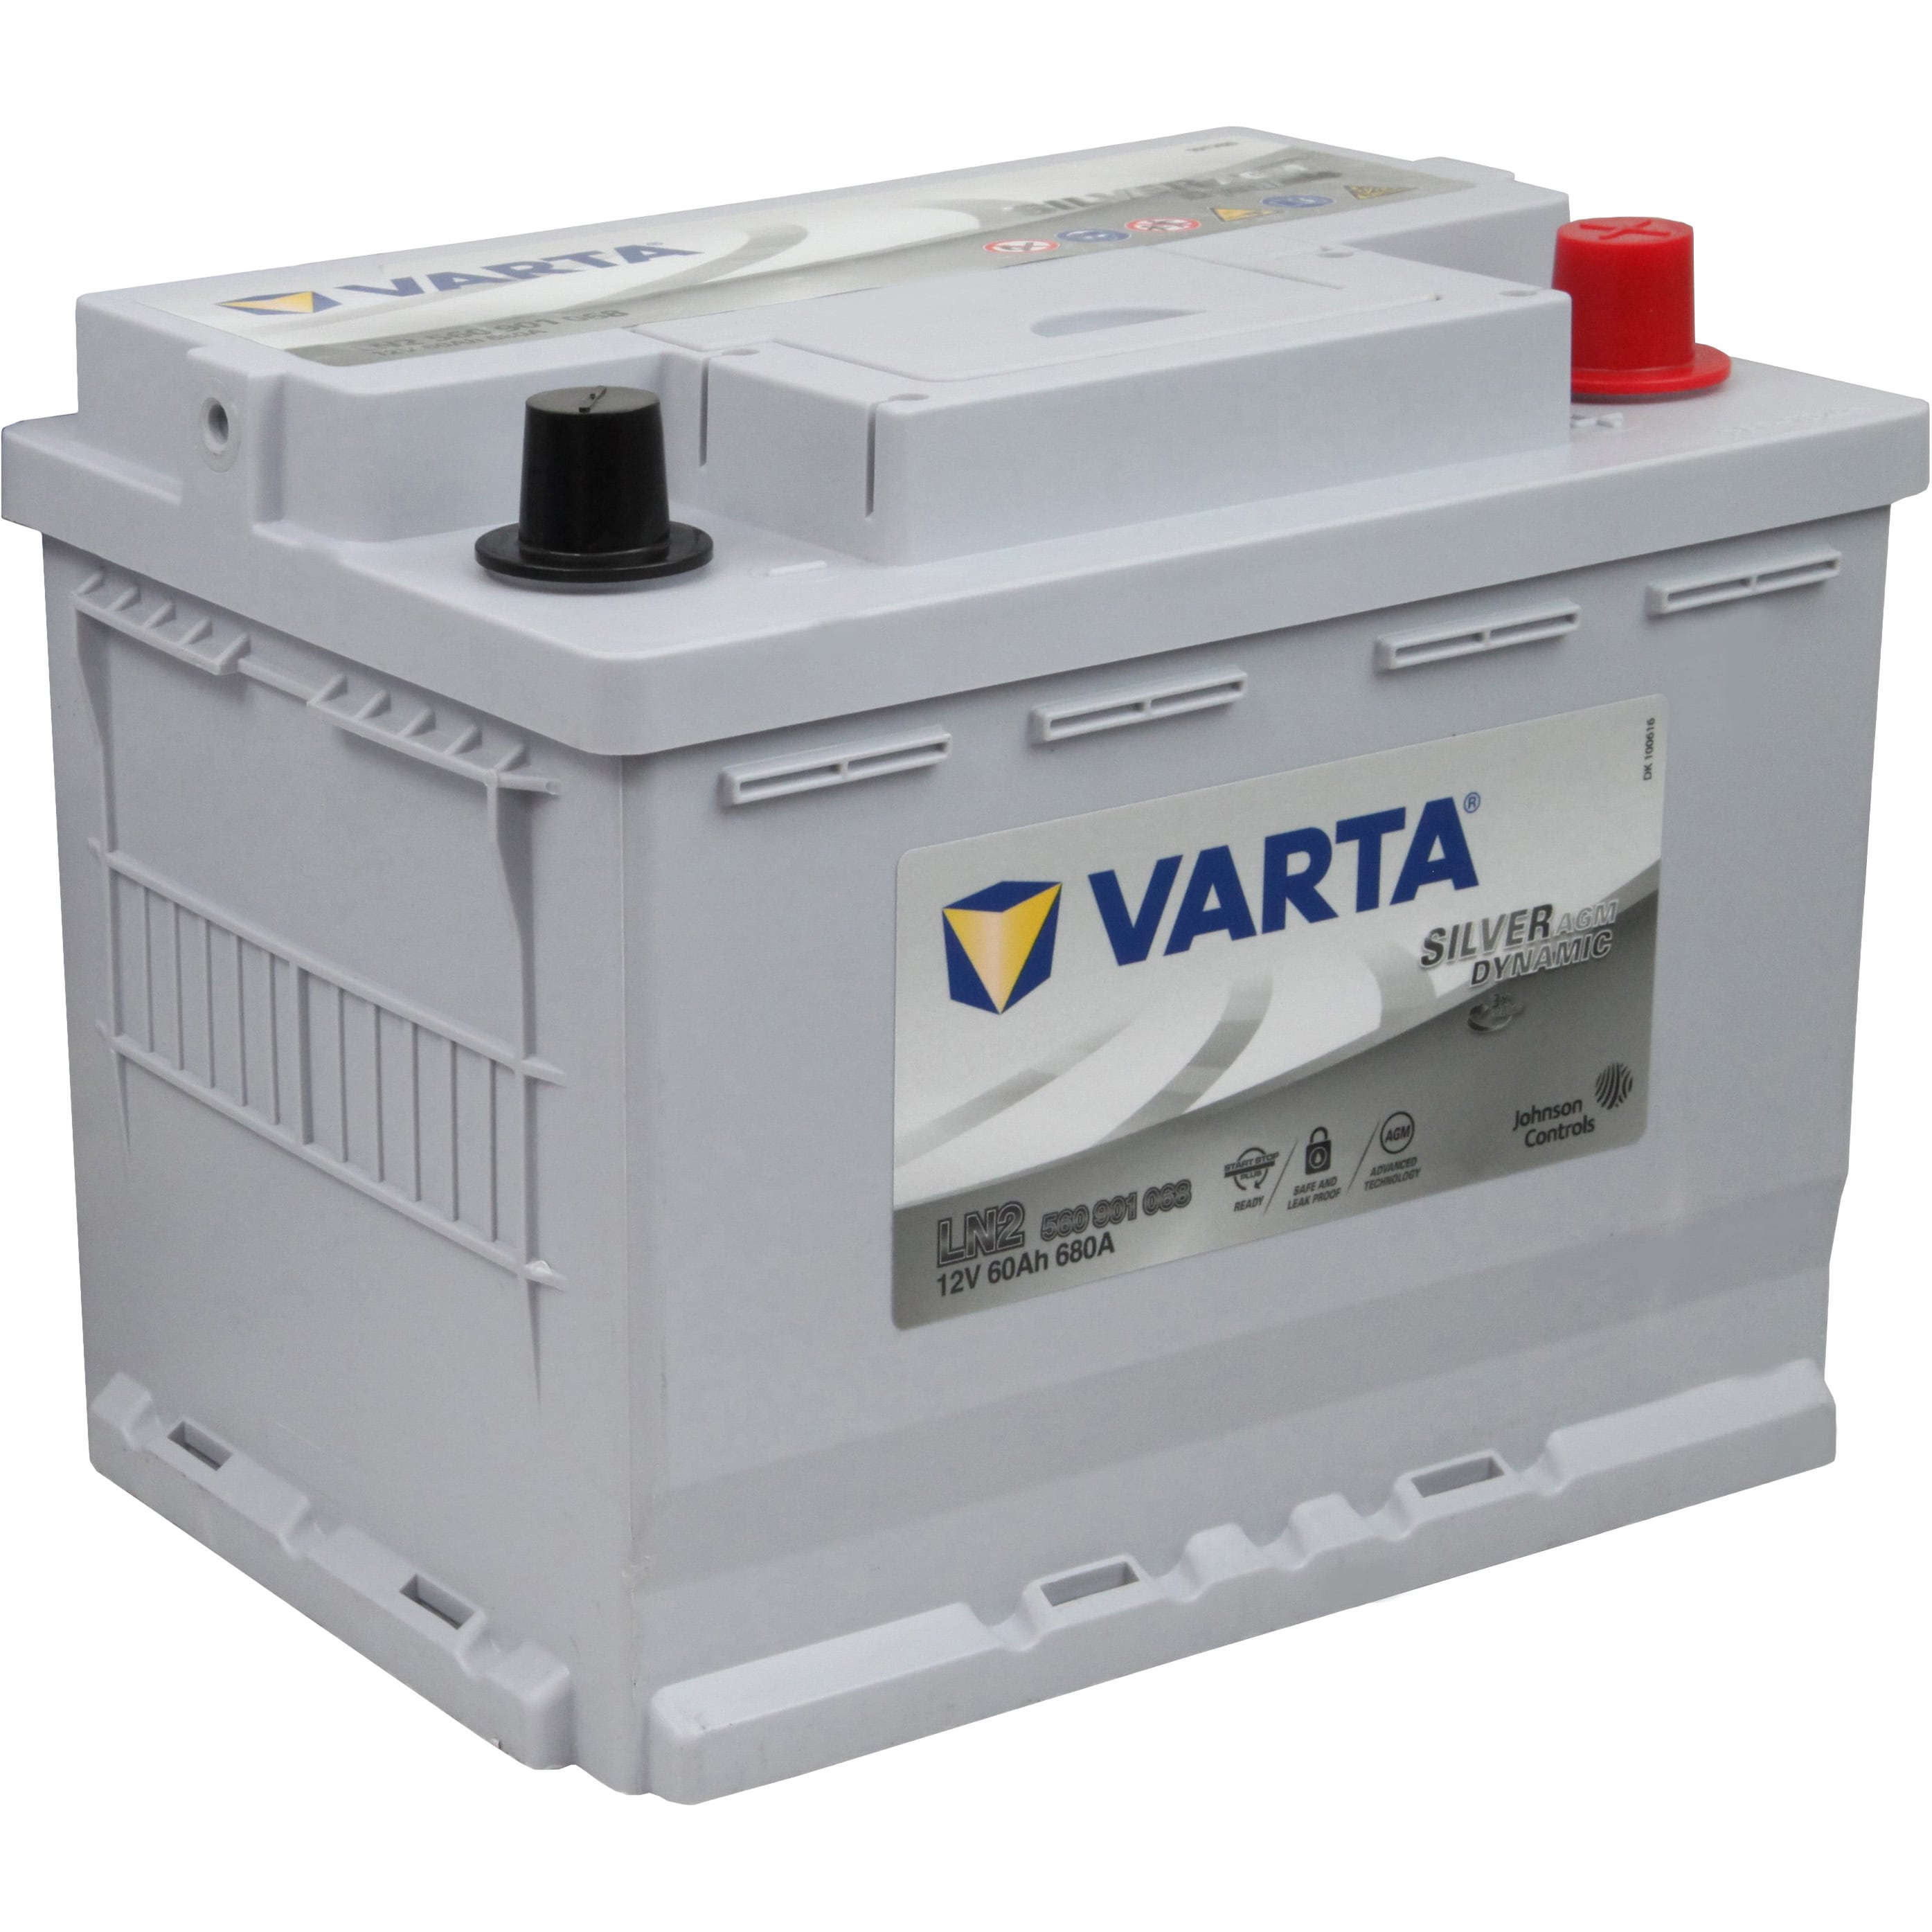 VARTA ベンツ GLKクラス X204 高性能 AGM バッテリー SilverDynamic AGM VARTA バルタ LN4AGM F21 580901080 800A/80Ah